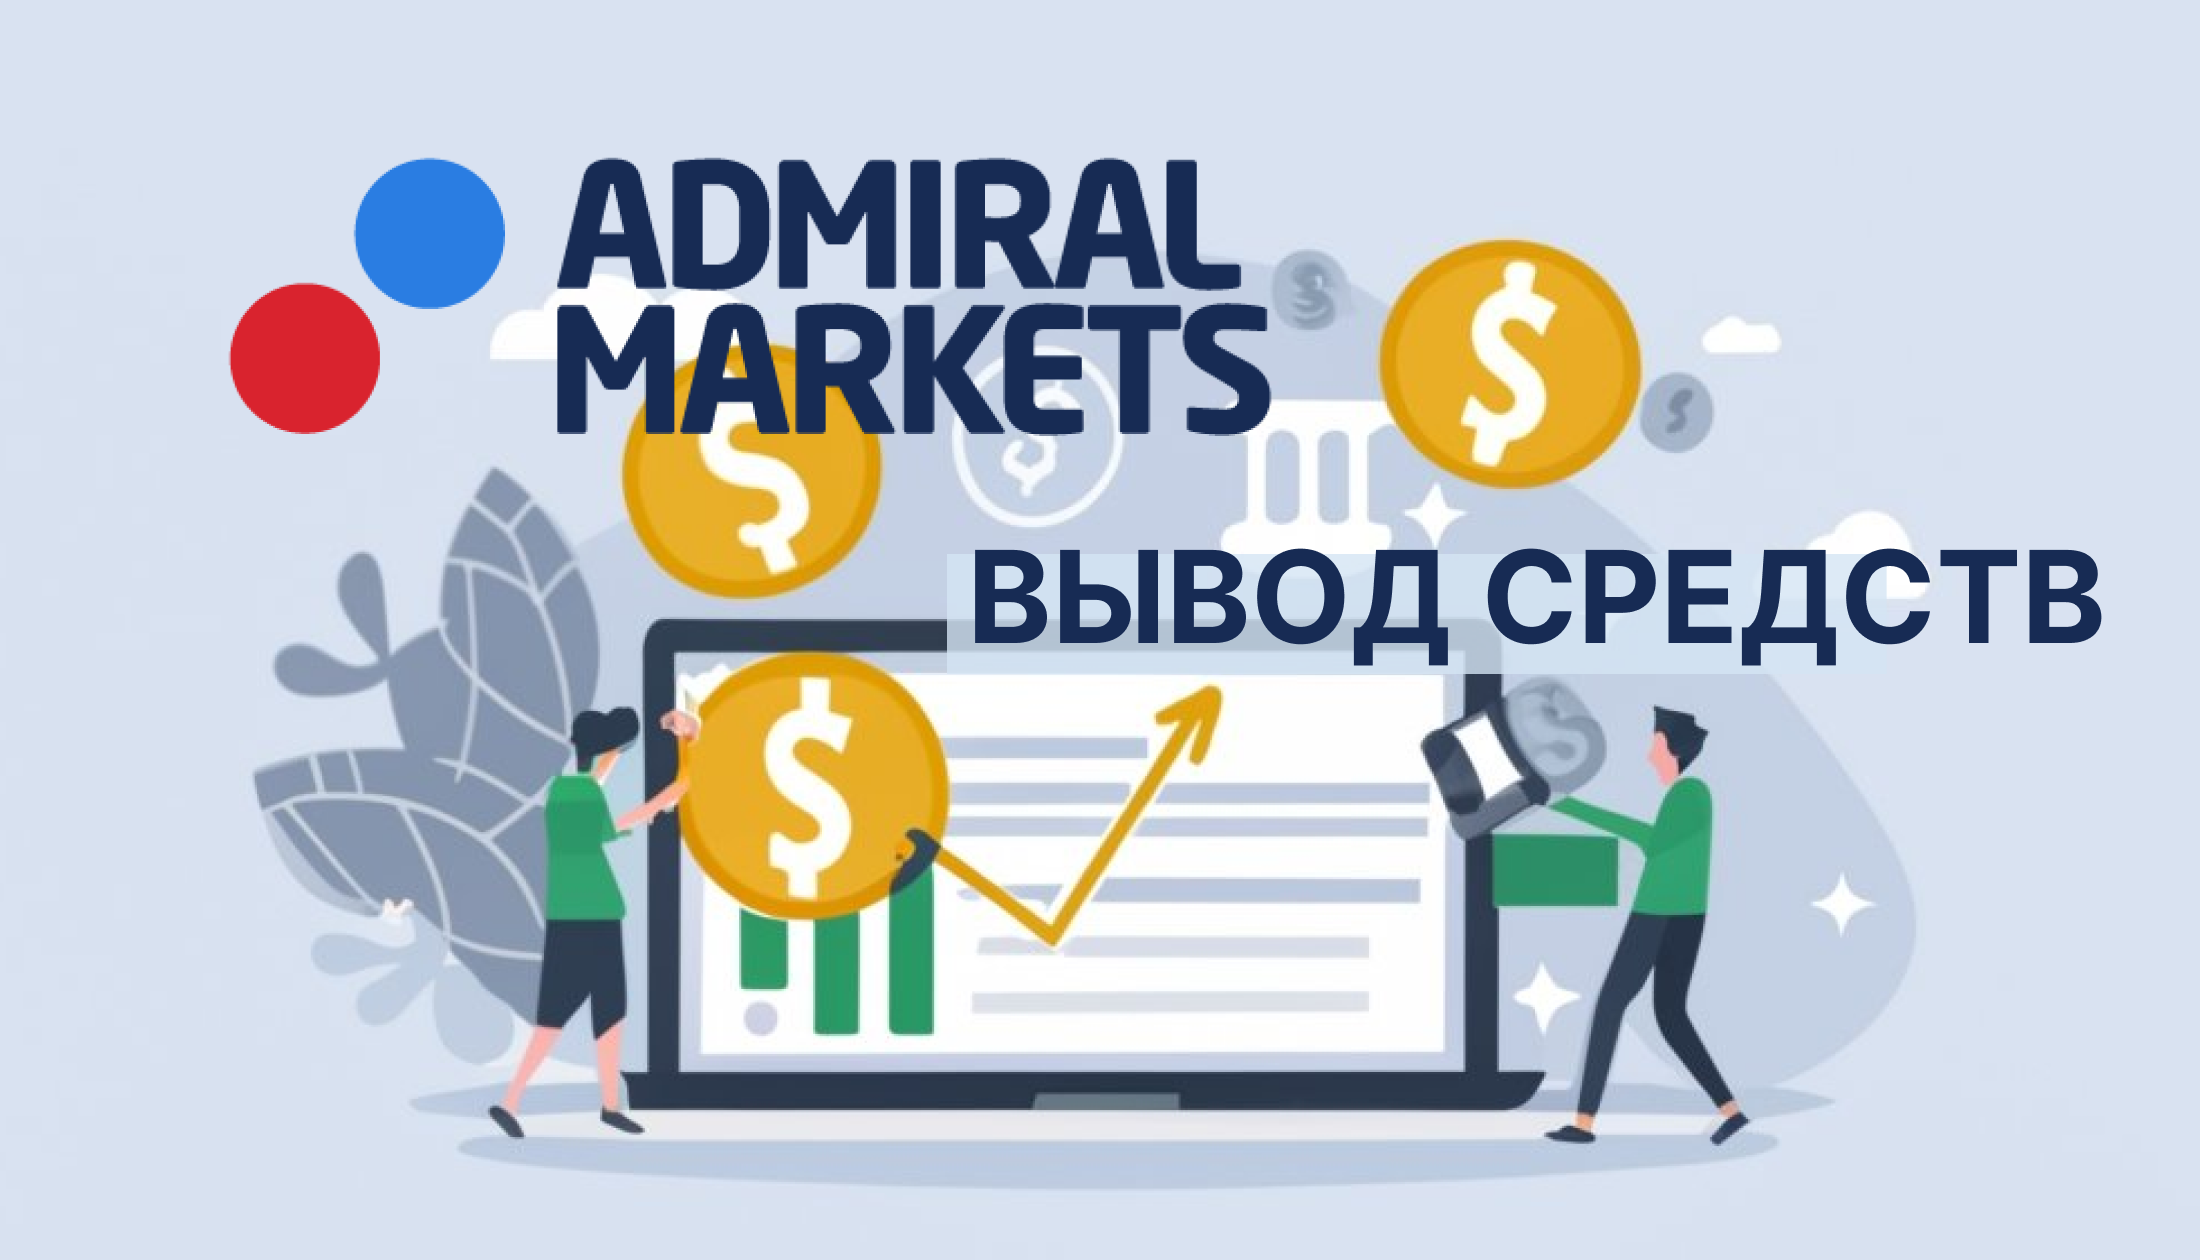 Admiral Markets вывод средств